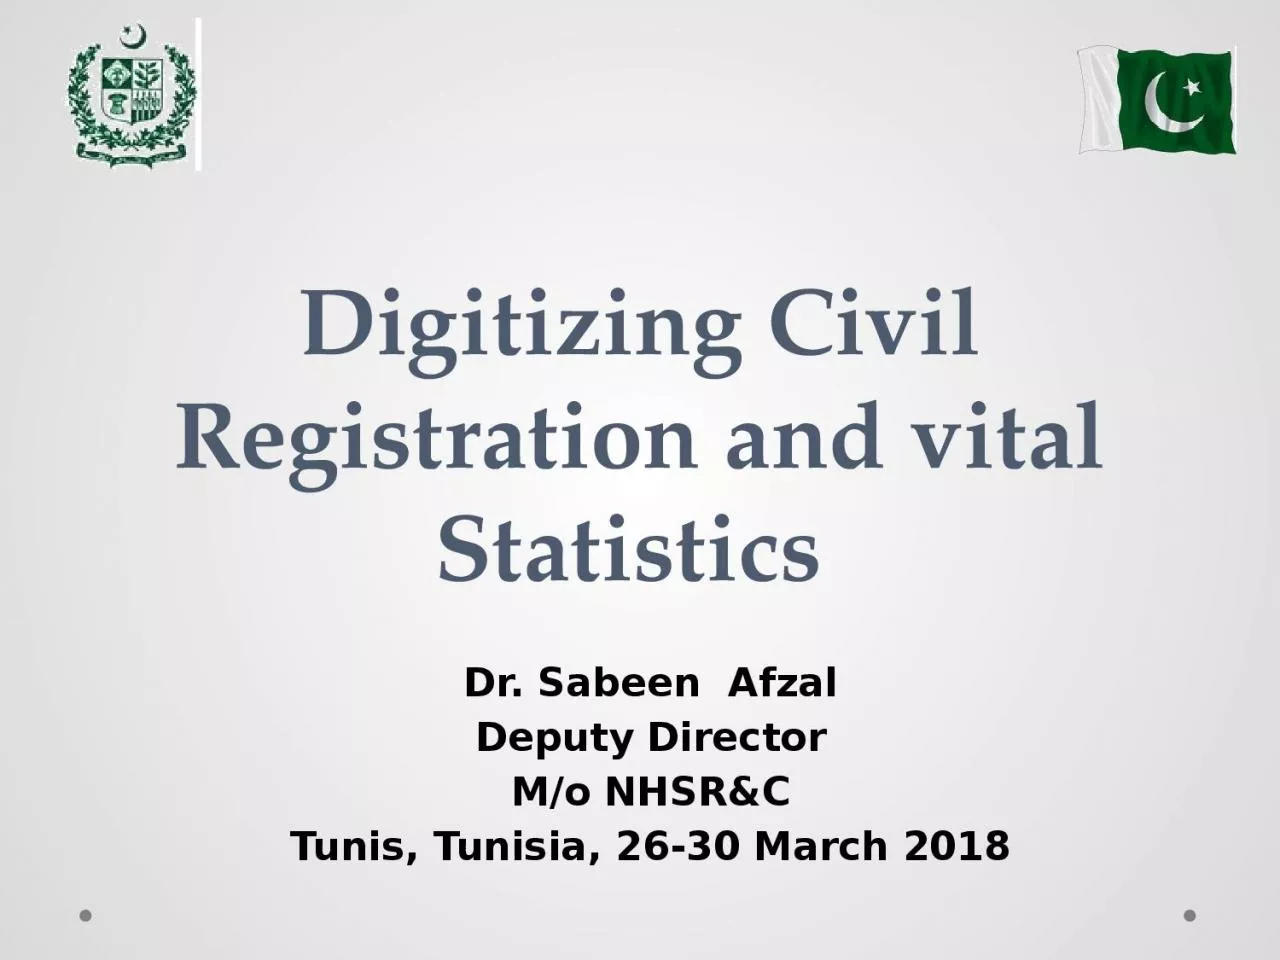 Digitizing Civil Registration and vital Statistics